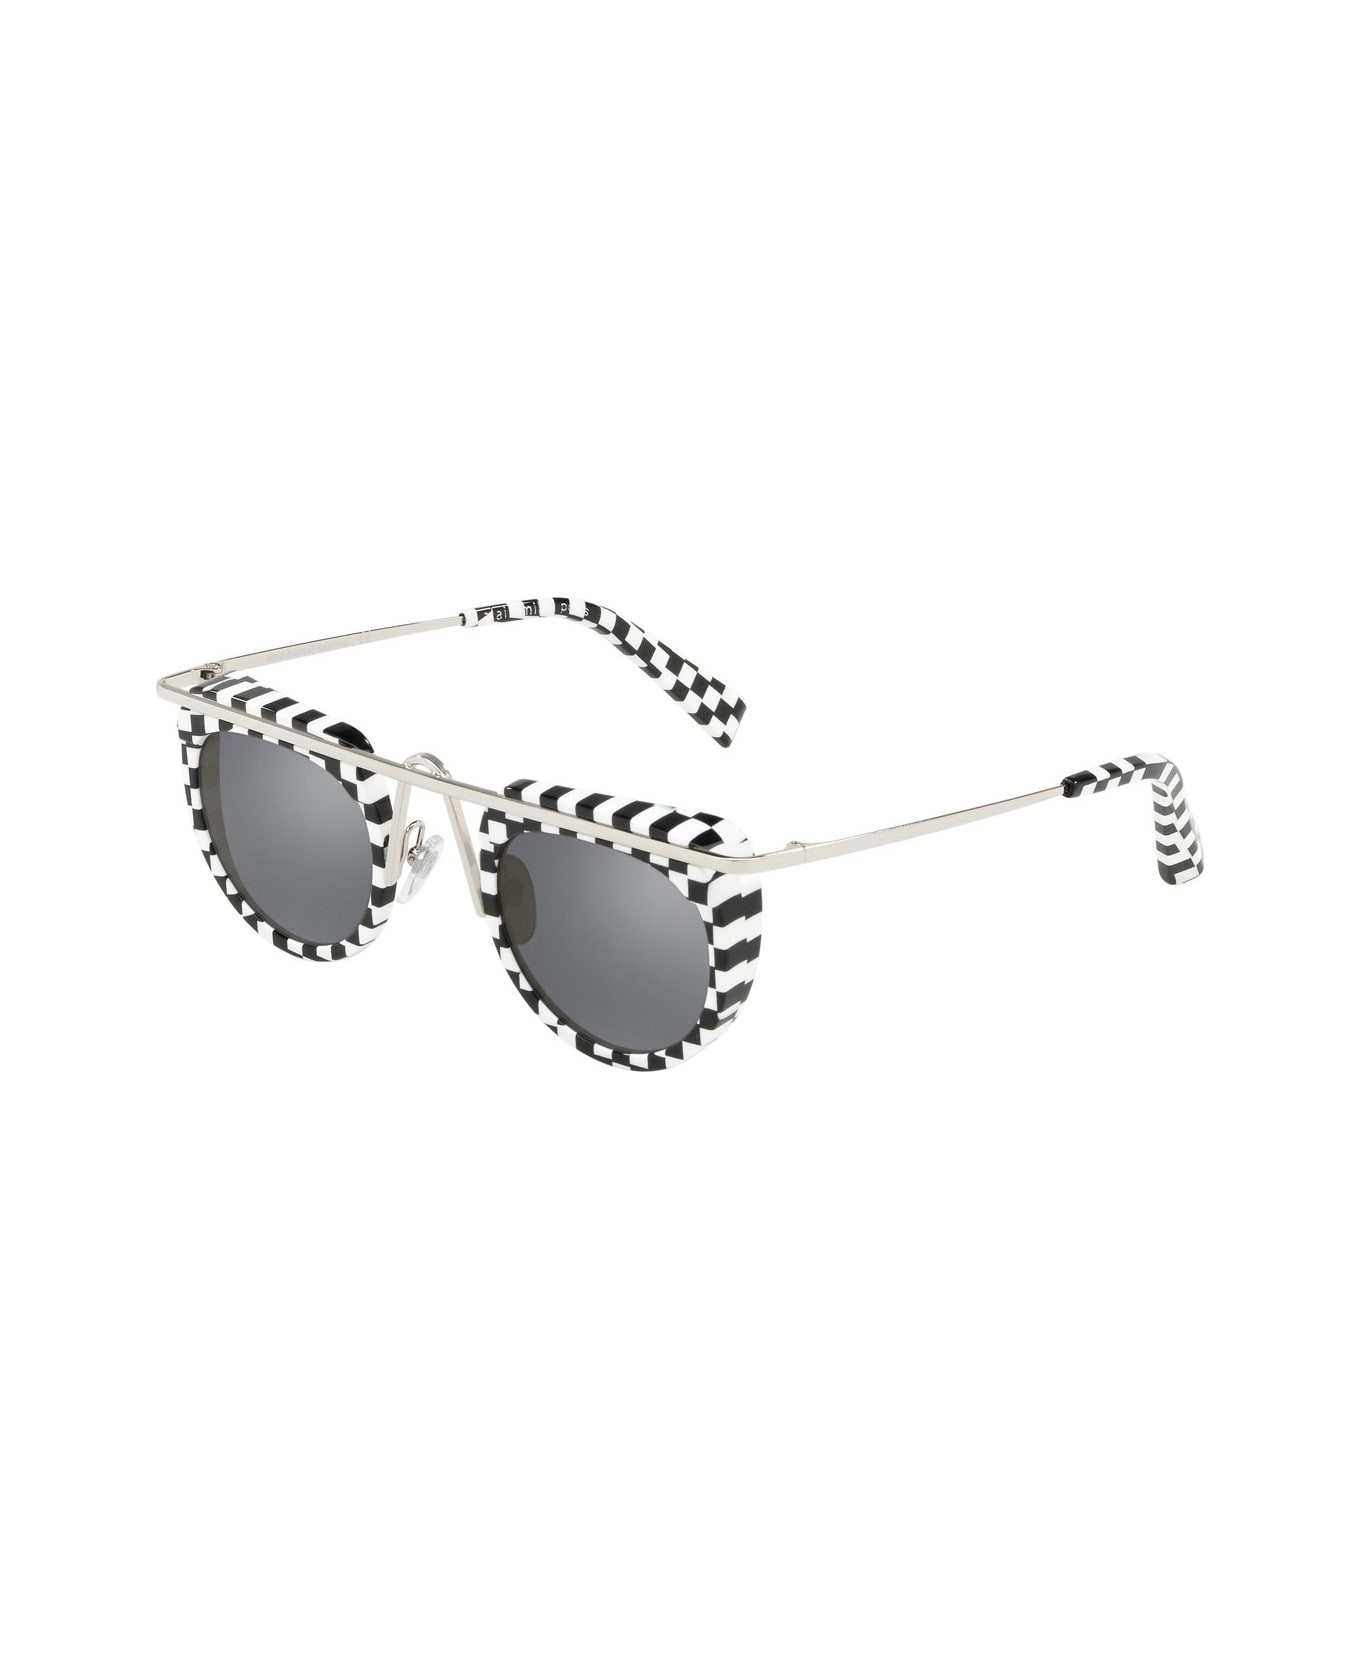 Alain Mikli 0a04011 Sunglasses - Bianco